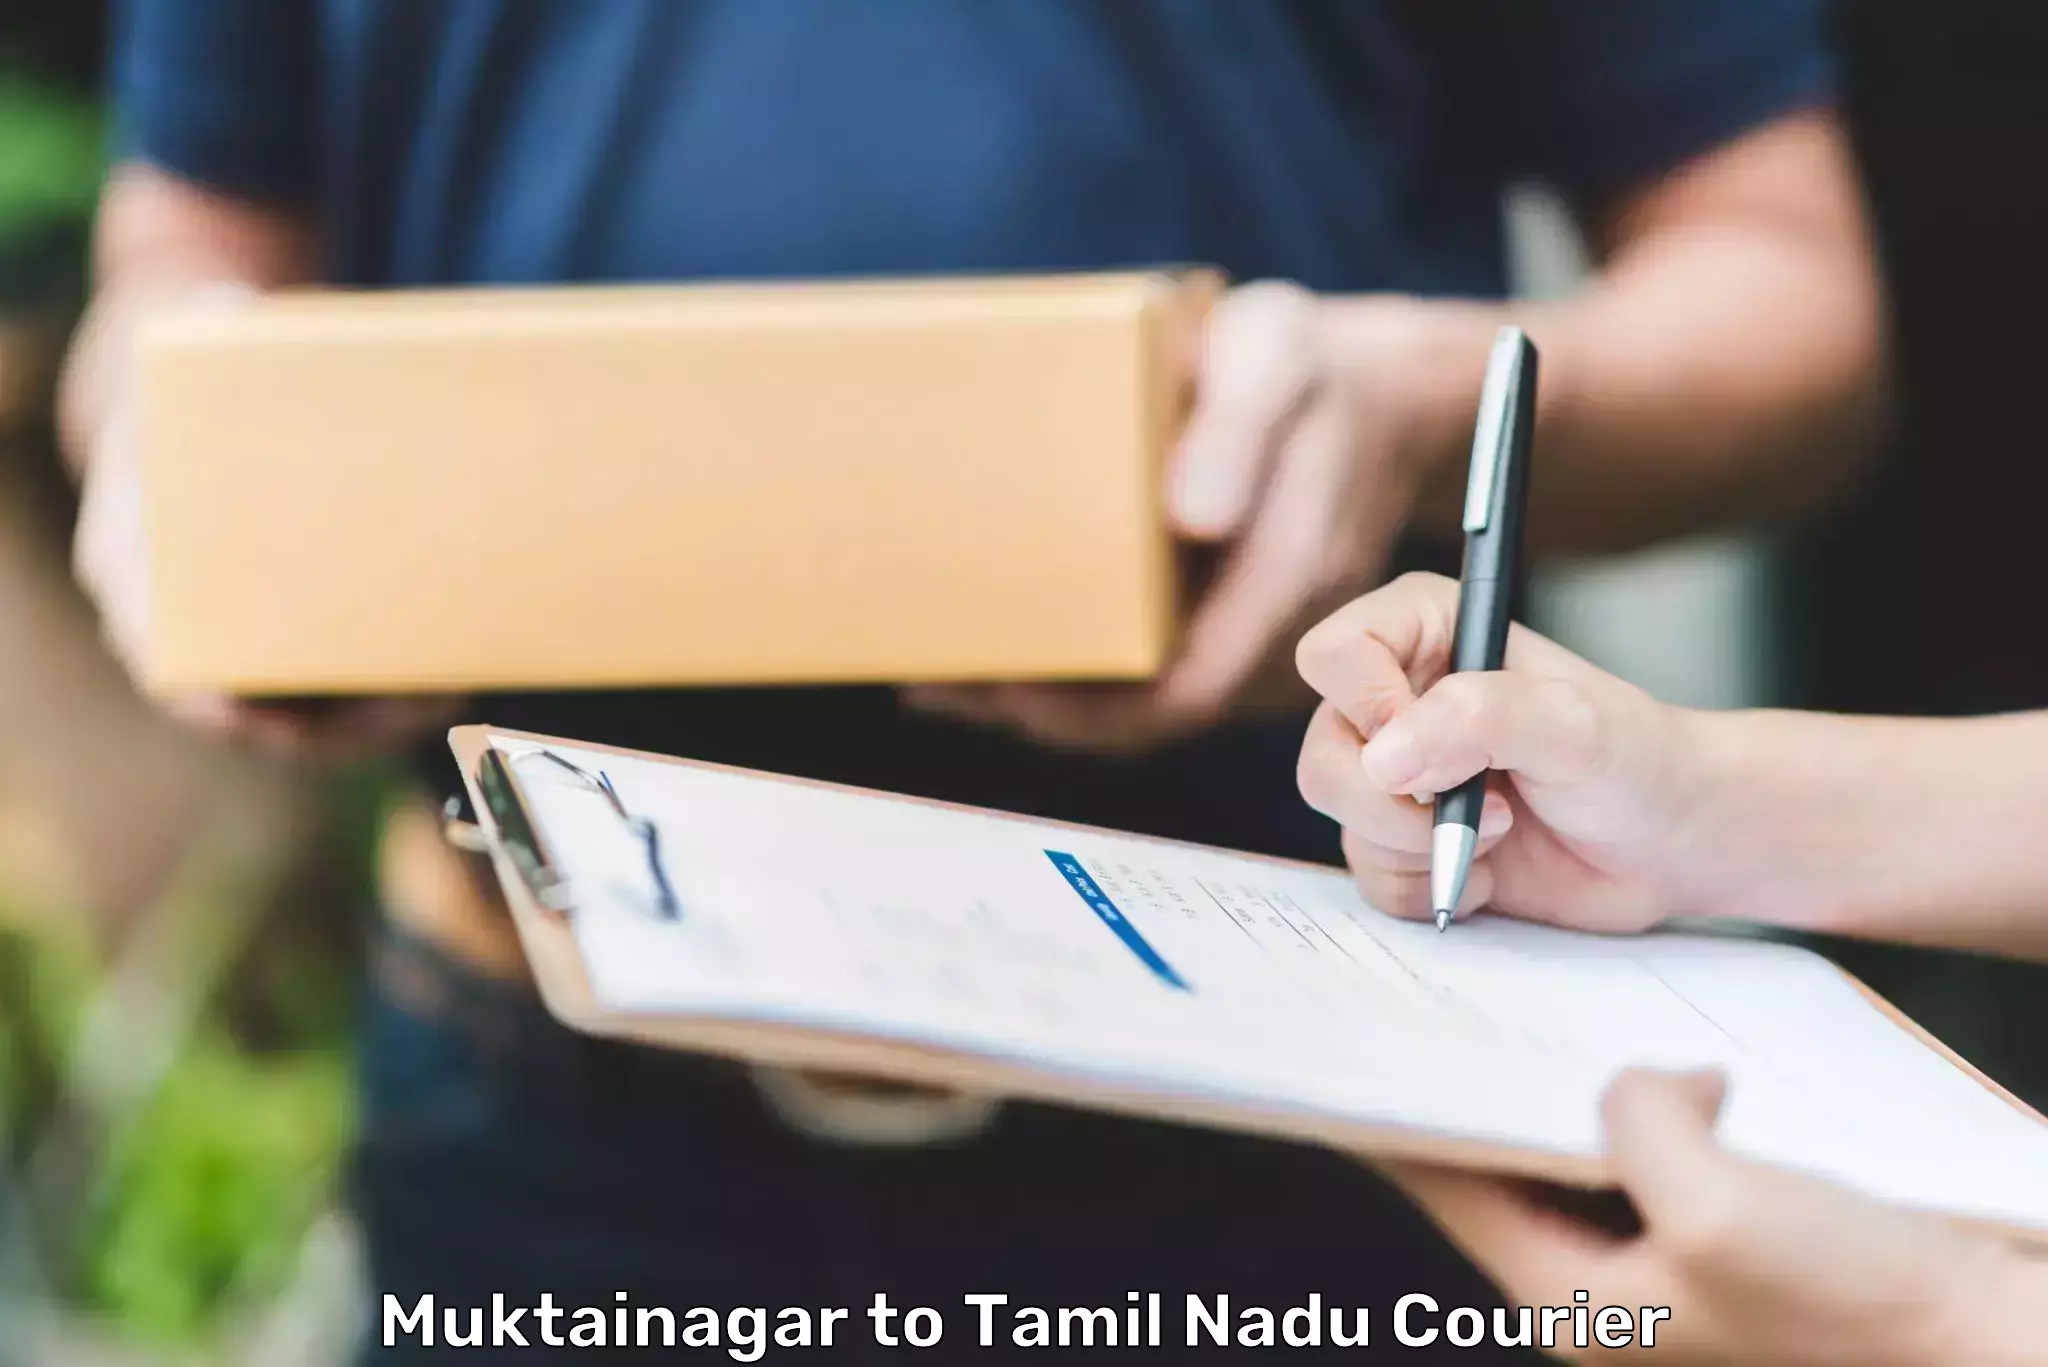 Global courier networks Muktainagar to Tamil Nadu